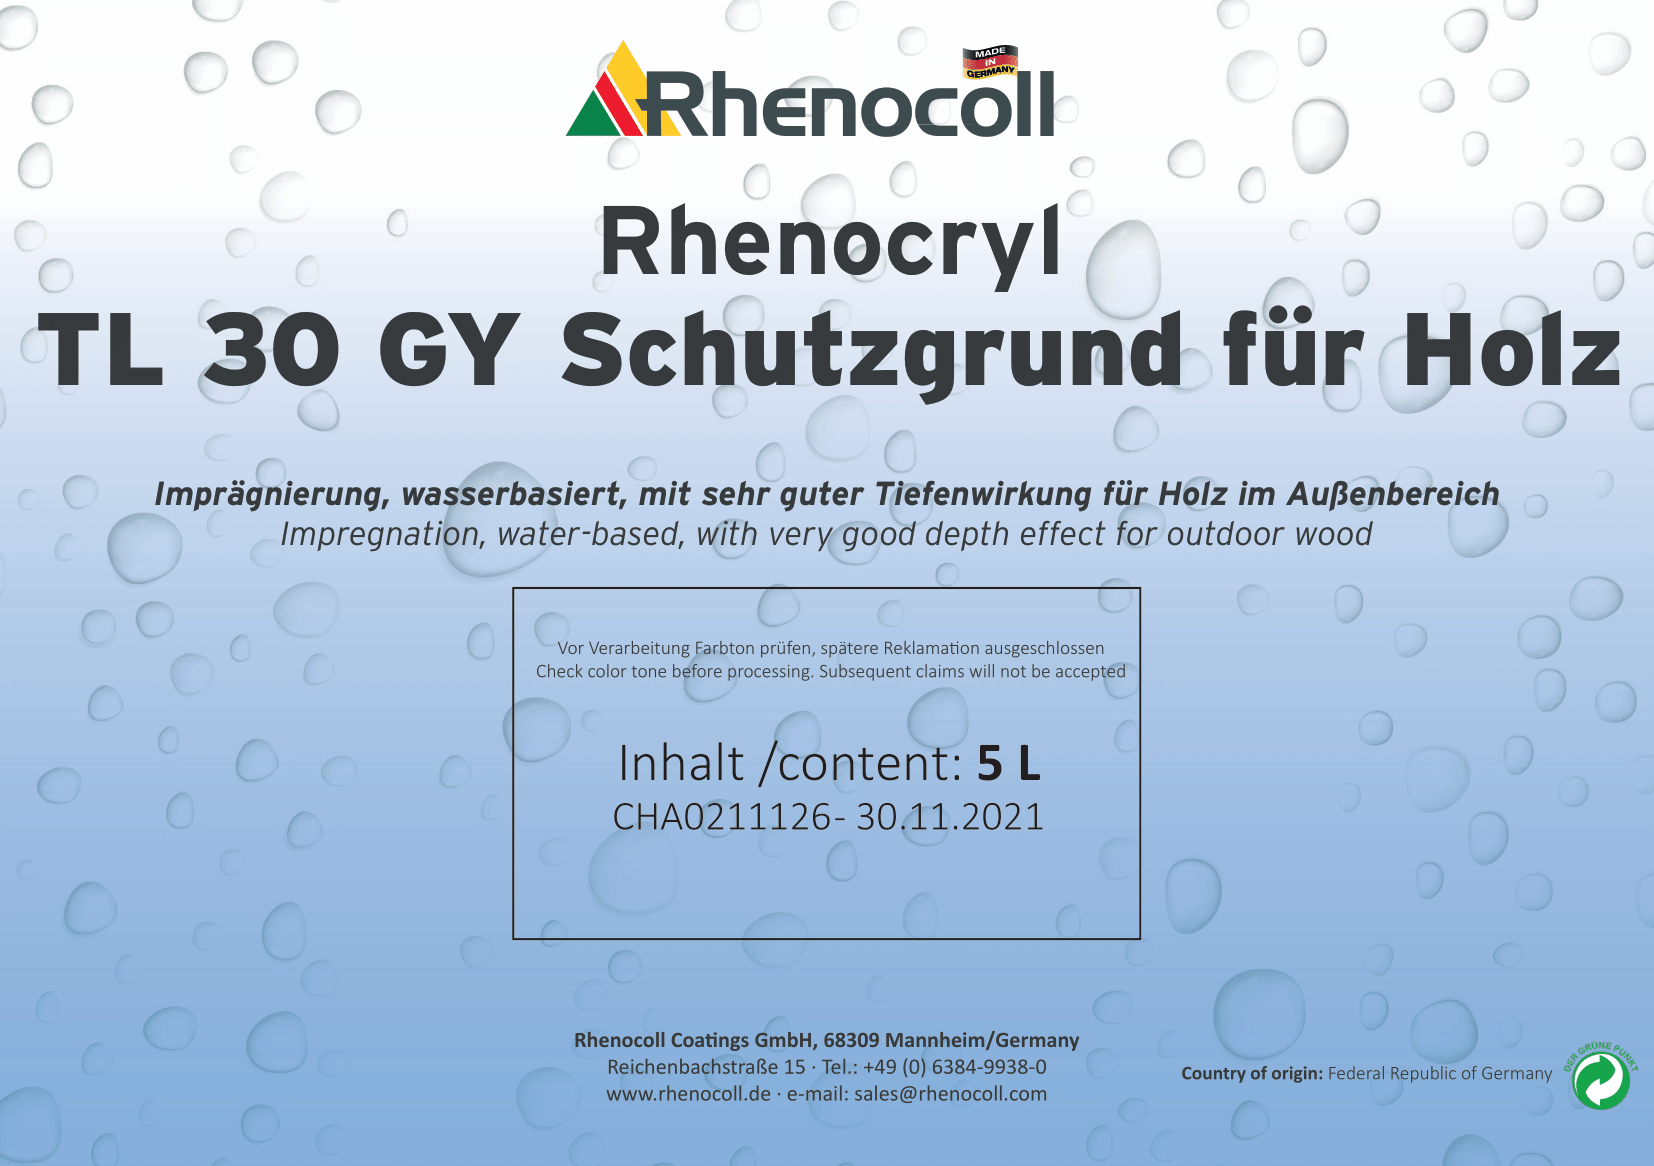 Rhenocryl TL 30 GY Schutzgrund für Holz